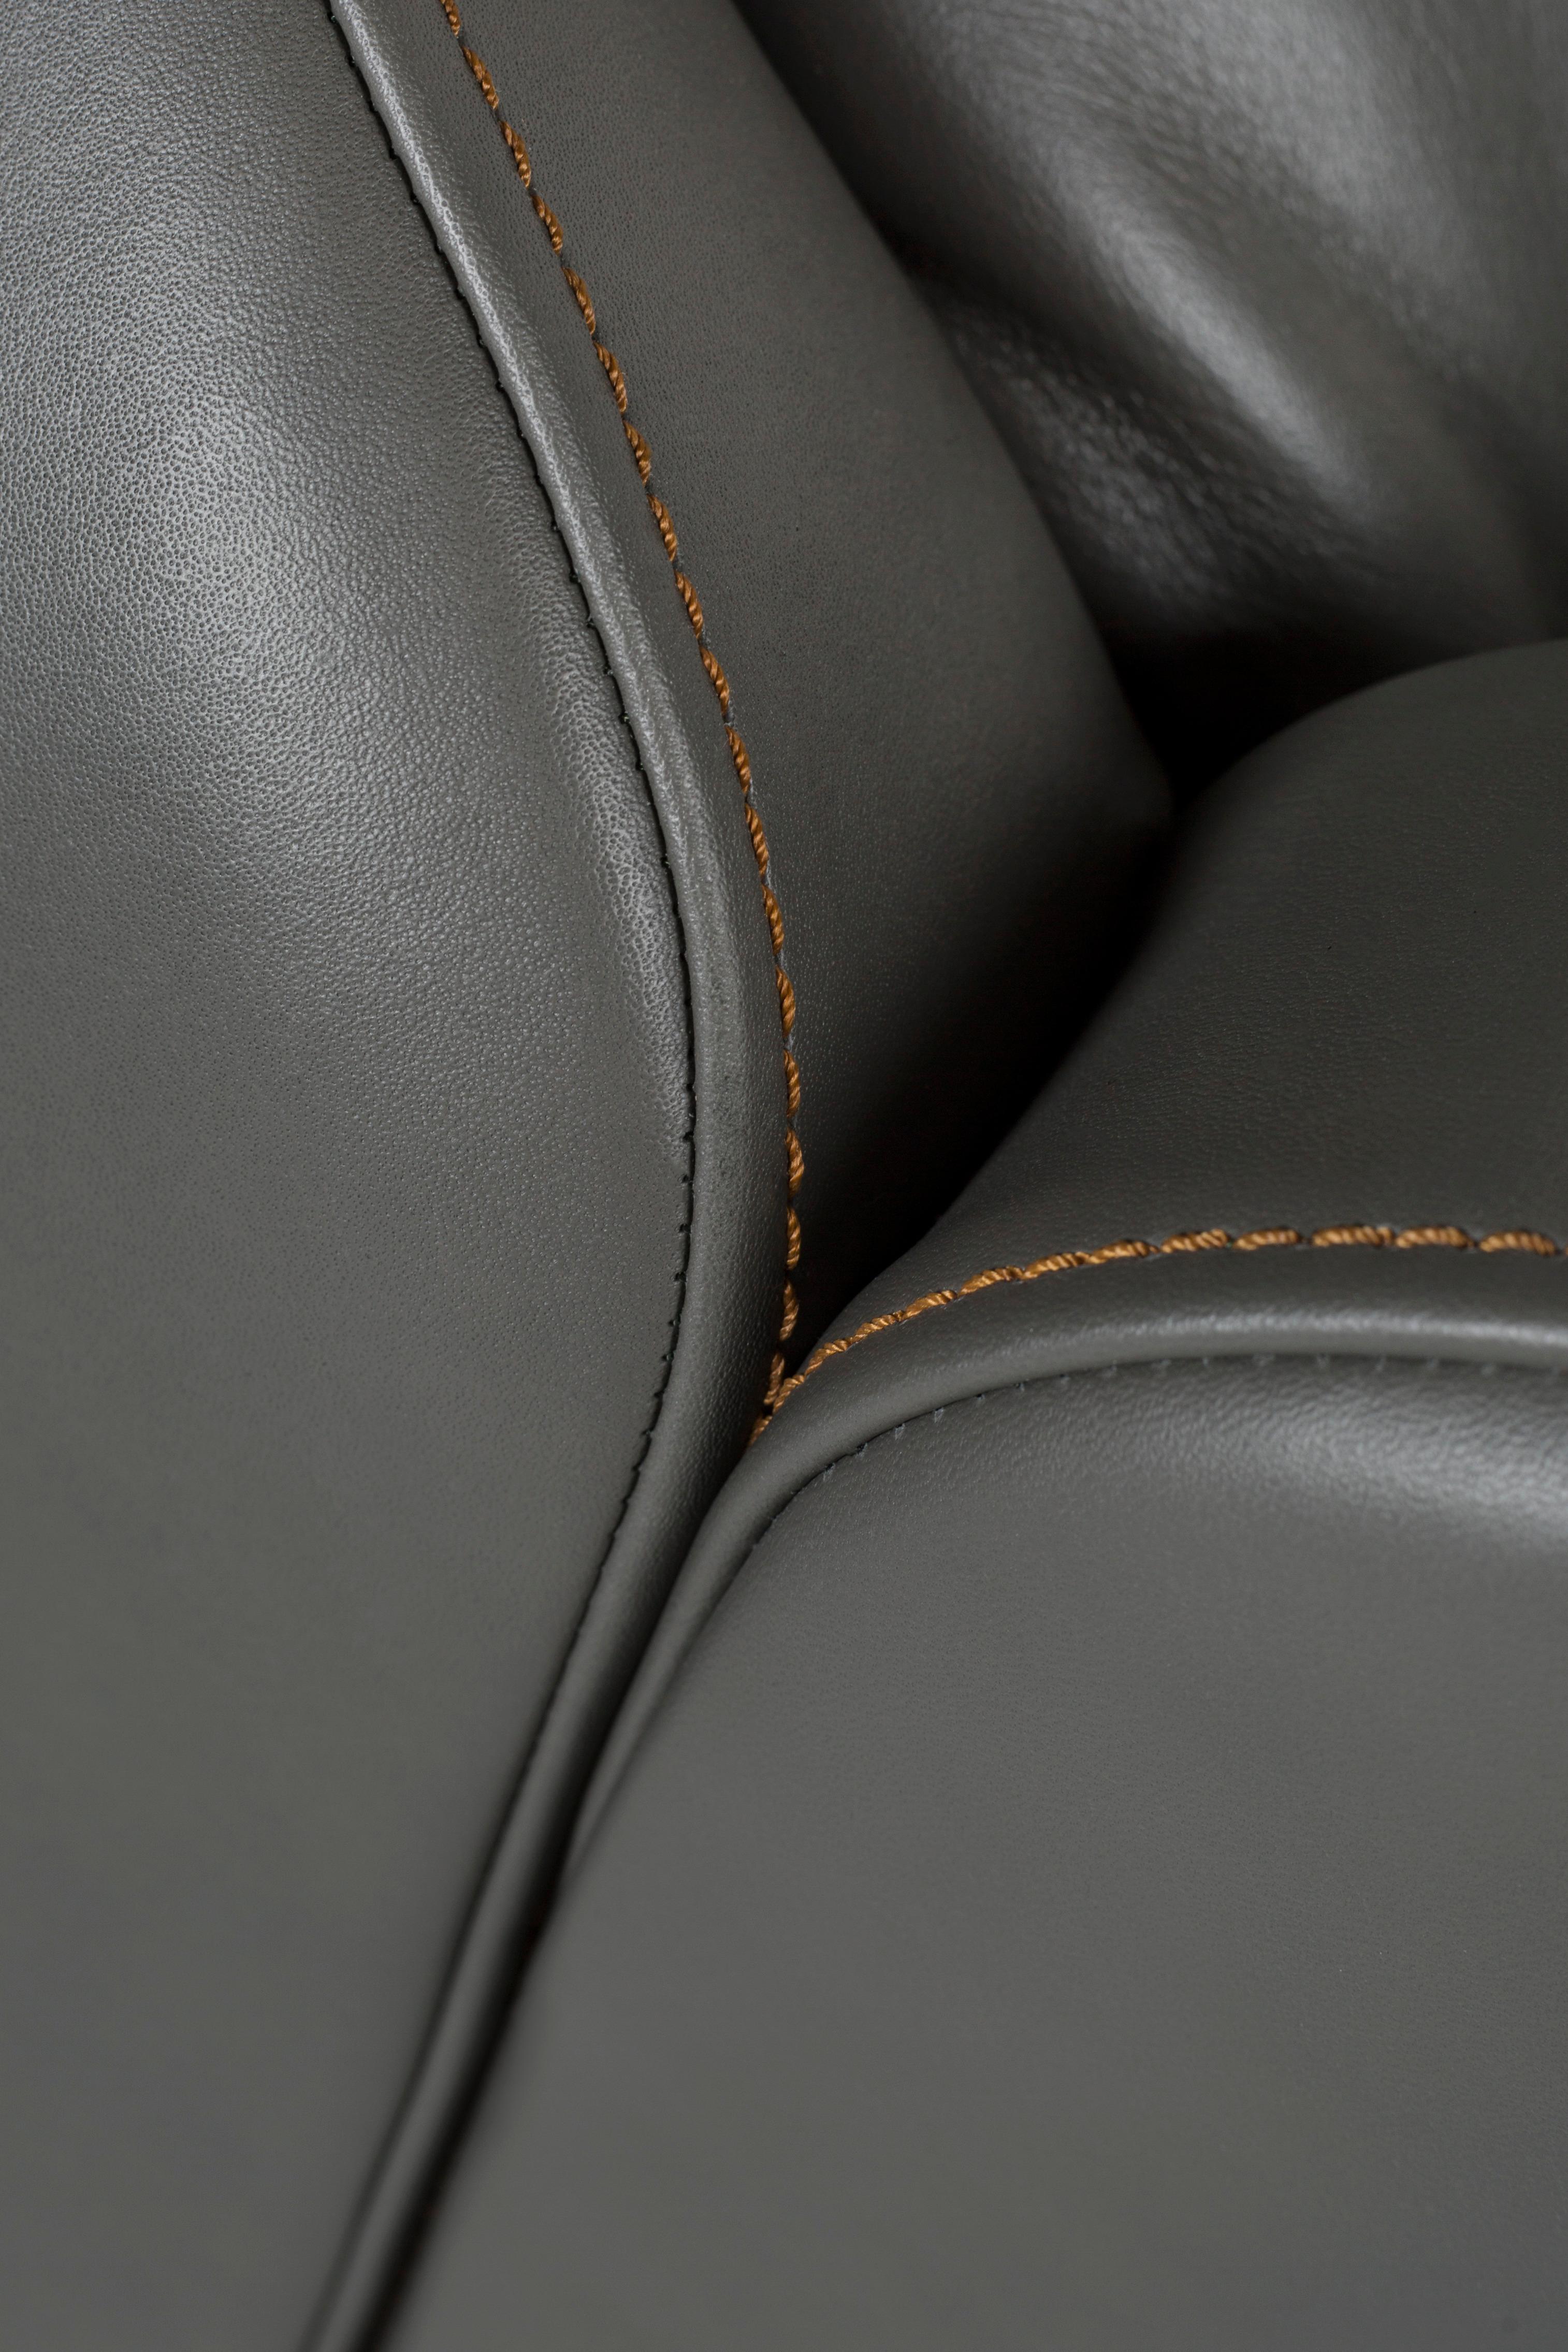 Modern Capelinhos Lounge Chair, Swivel, Leather, Handmade Portugal by Greenapple For Sale 4